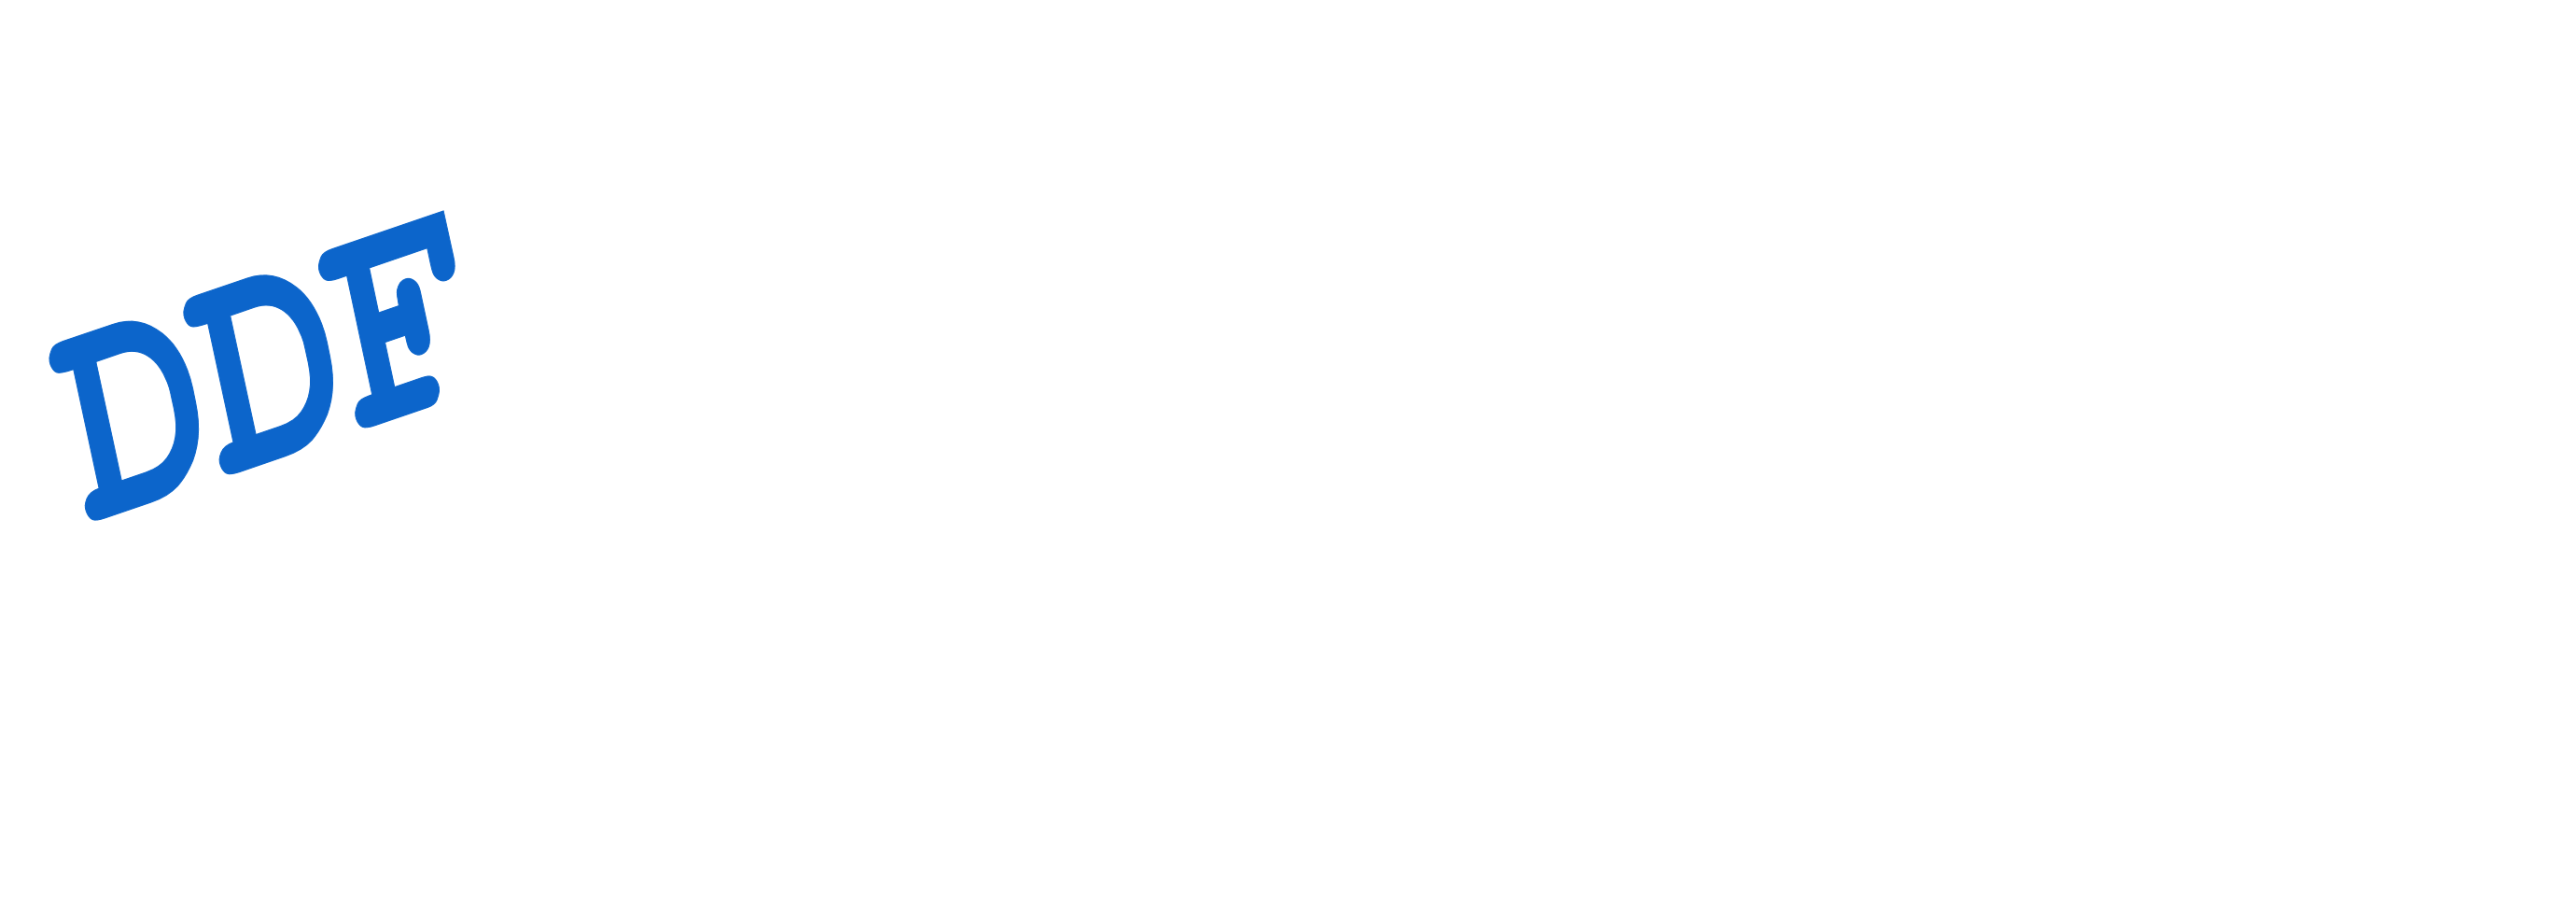 Delvecchio Digital Forensics